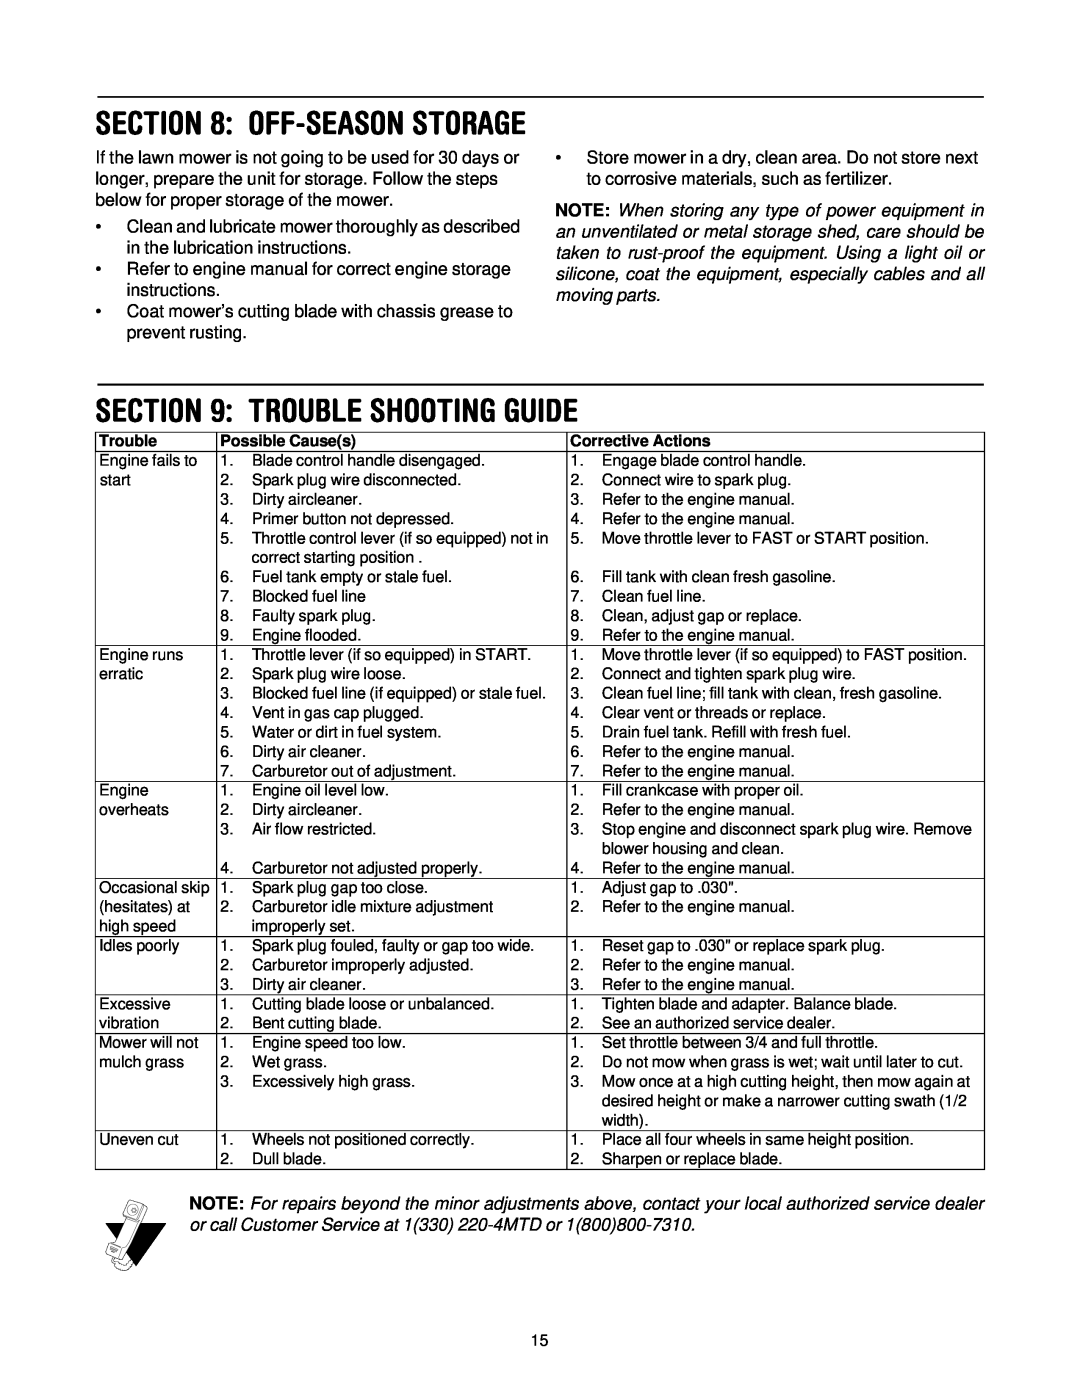 Yard Machines 429 manual Trouble Shooting Guide, Off-Season Storage 